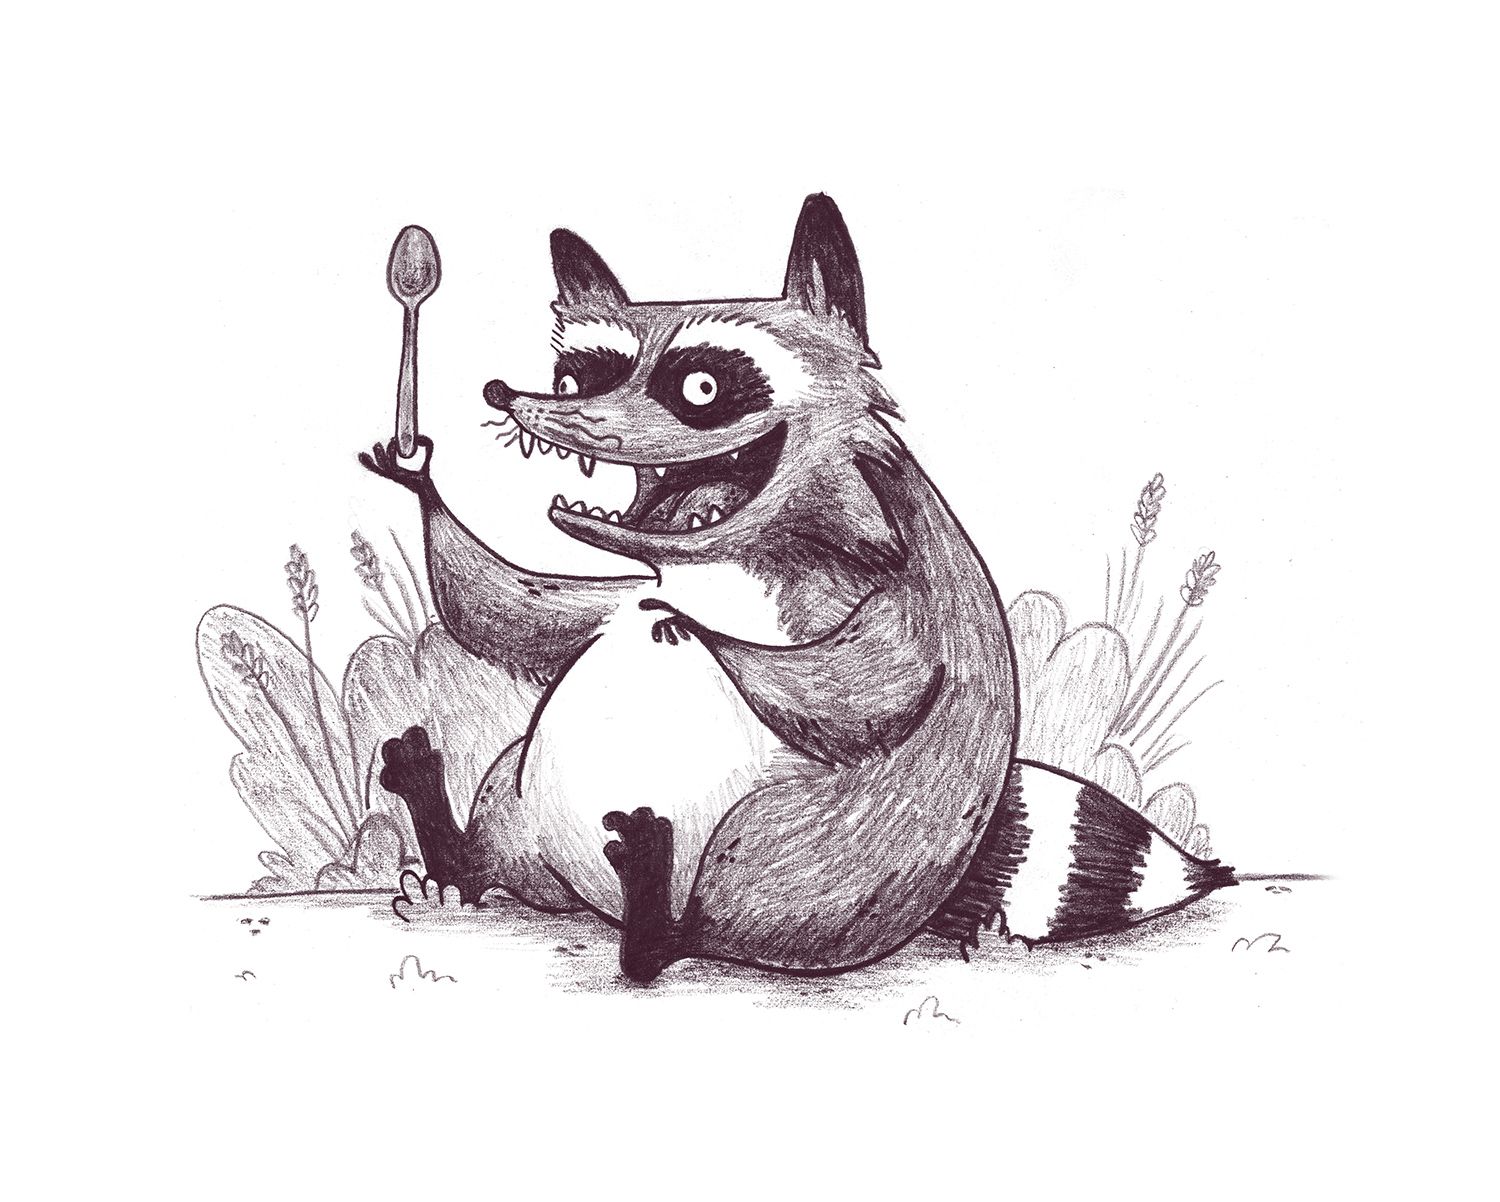 raccoon2.jpg